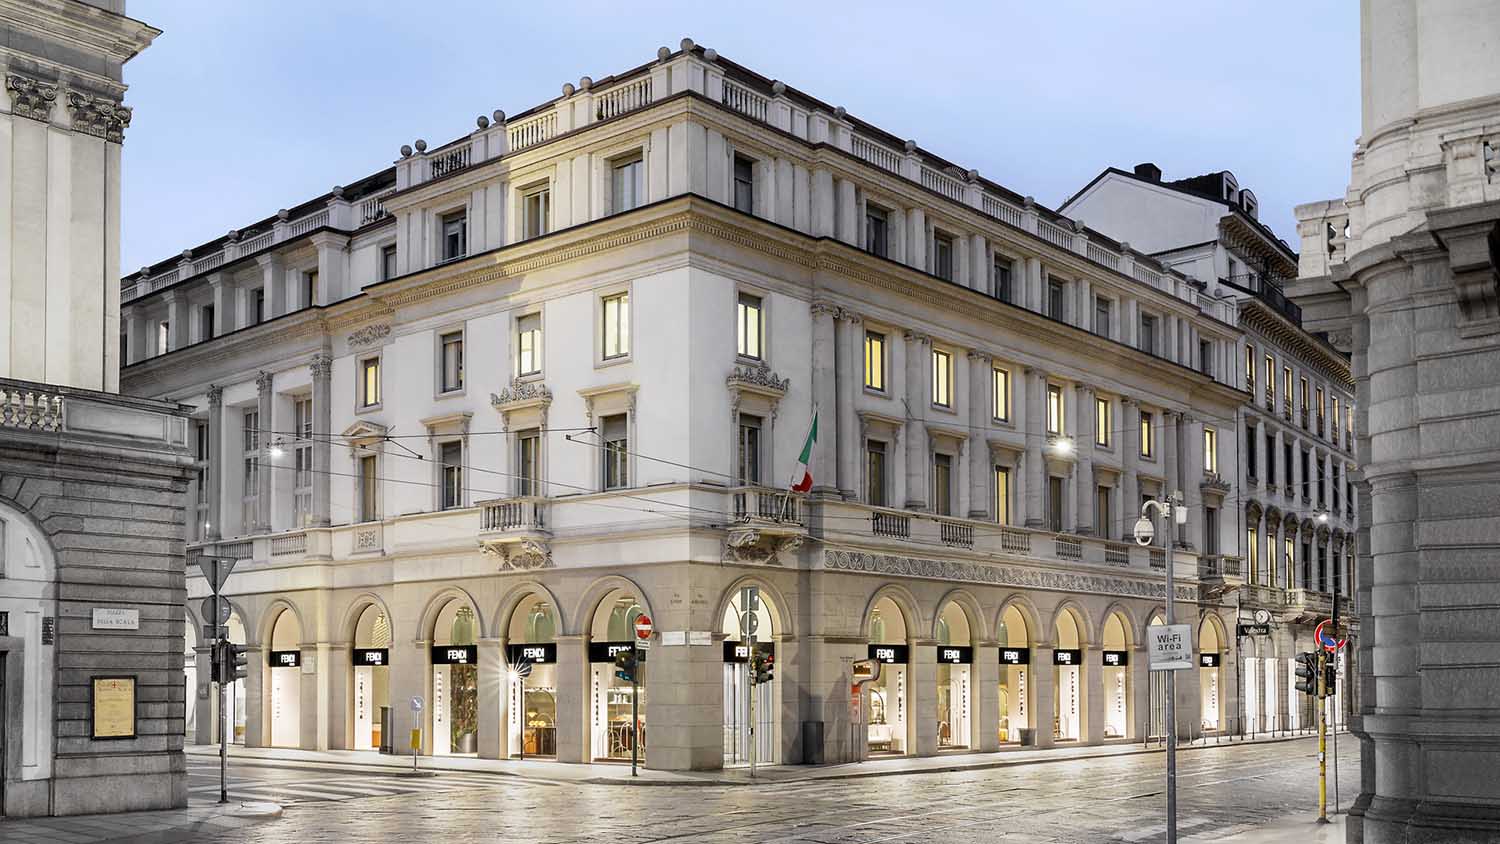 Fendi Casa Unveils New Collection During Milan Design Week – WWD